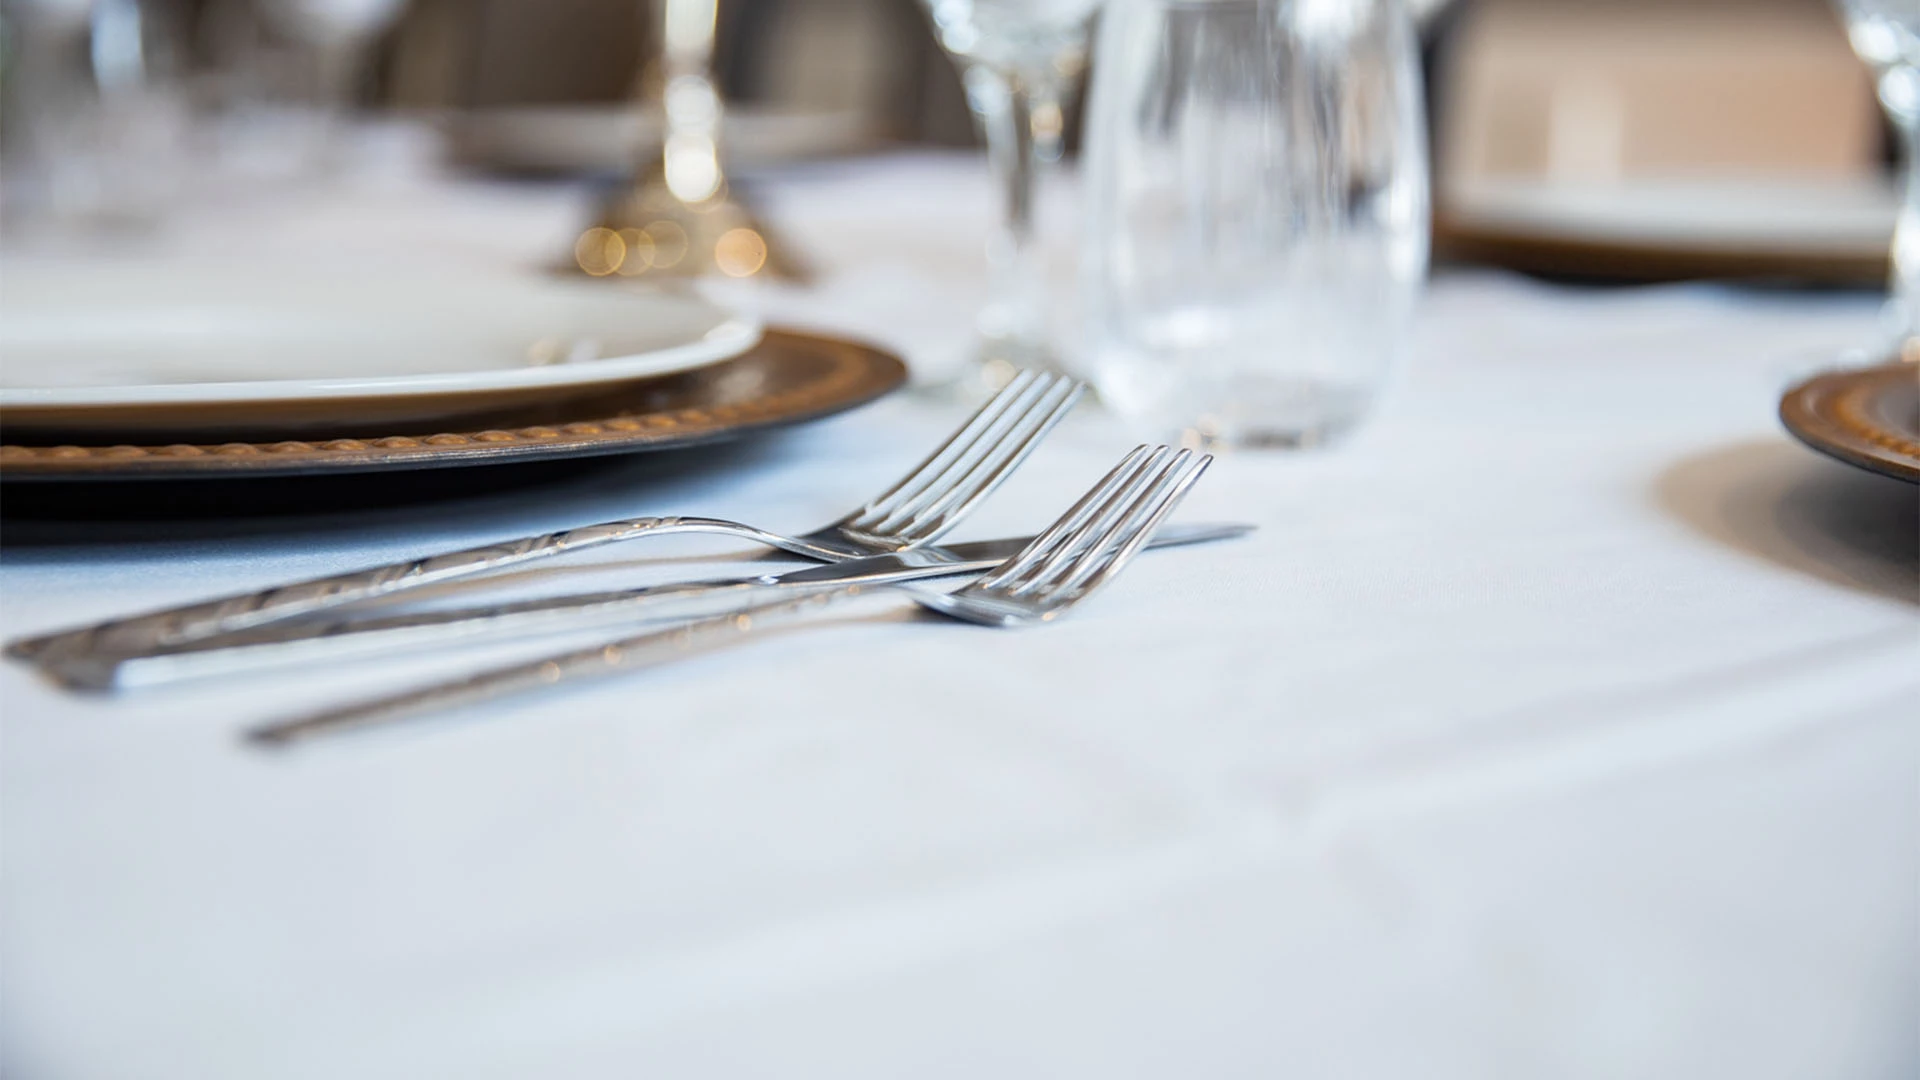 Forks on dining table in senior living communities